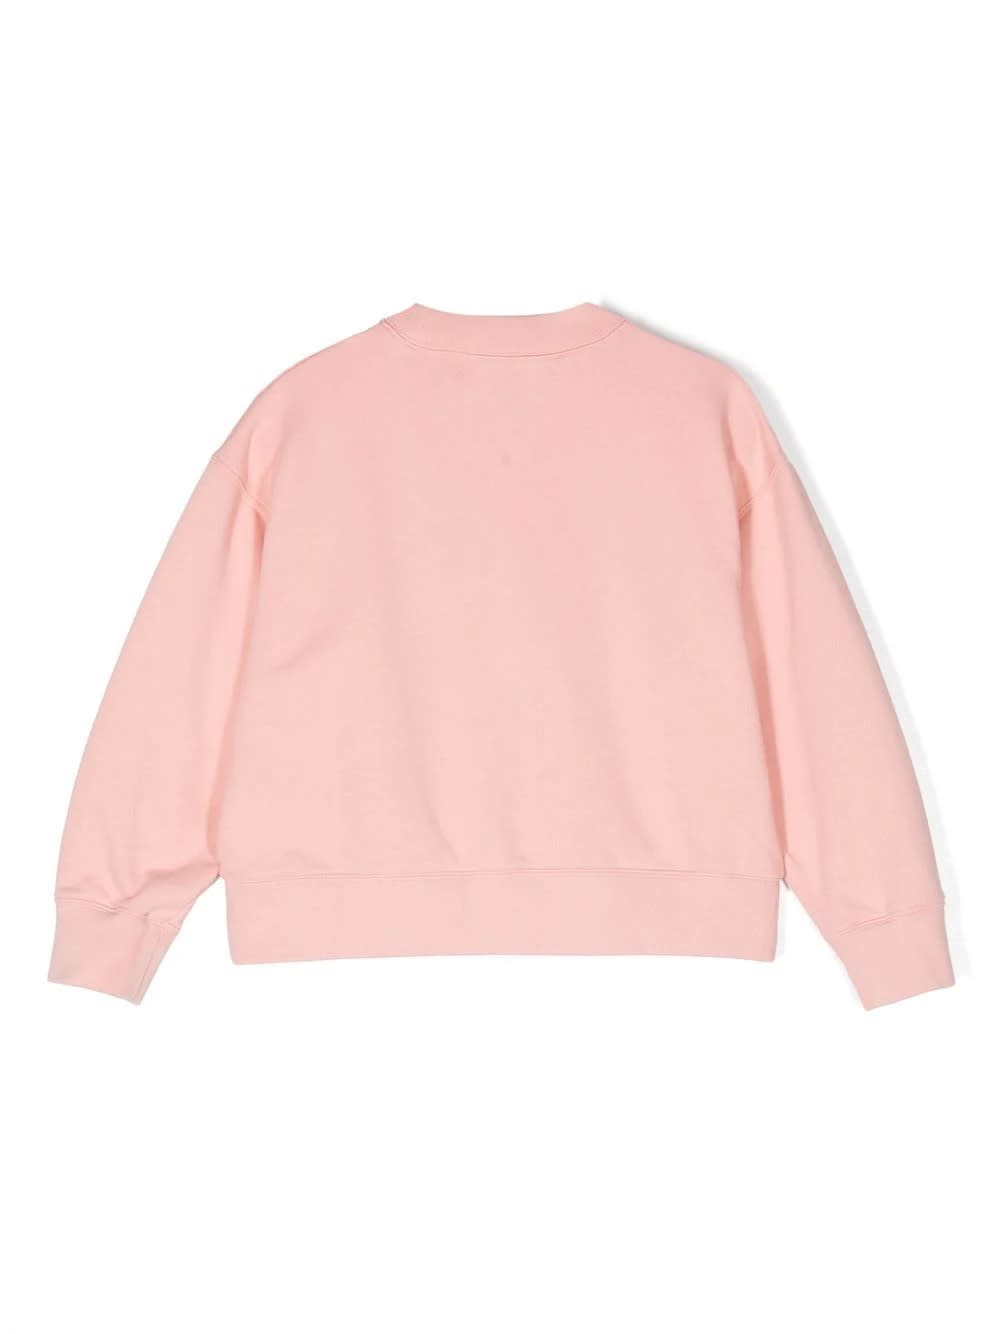 Shop Palm Angels Pink Bear Crew Neck Sweatshirt